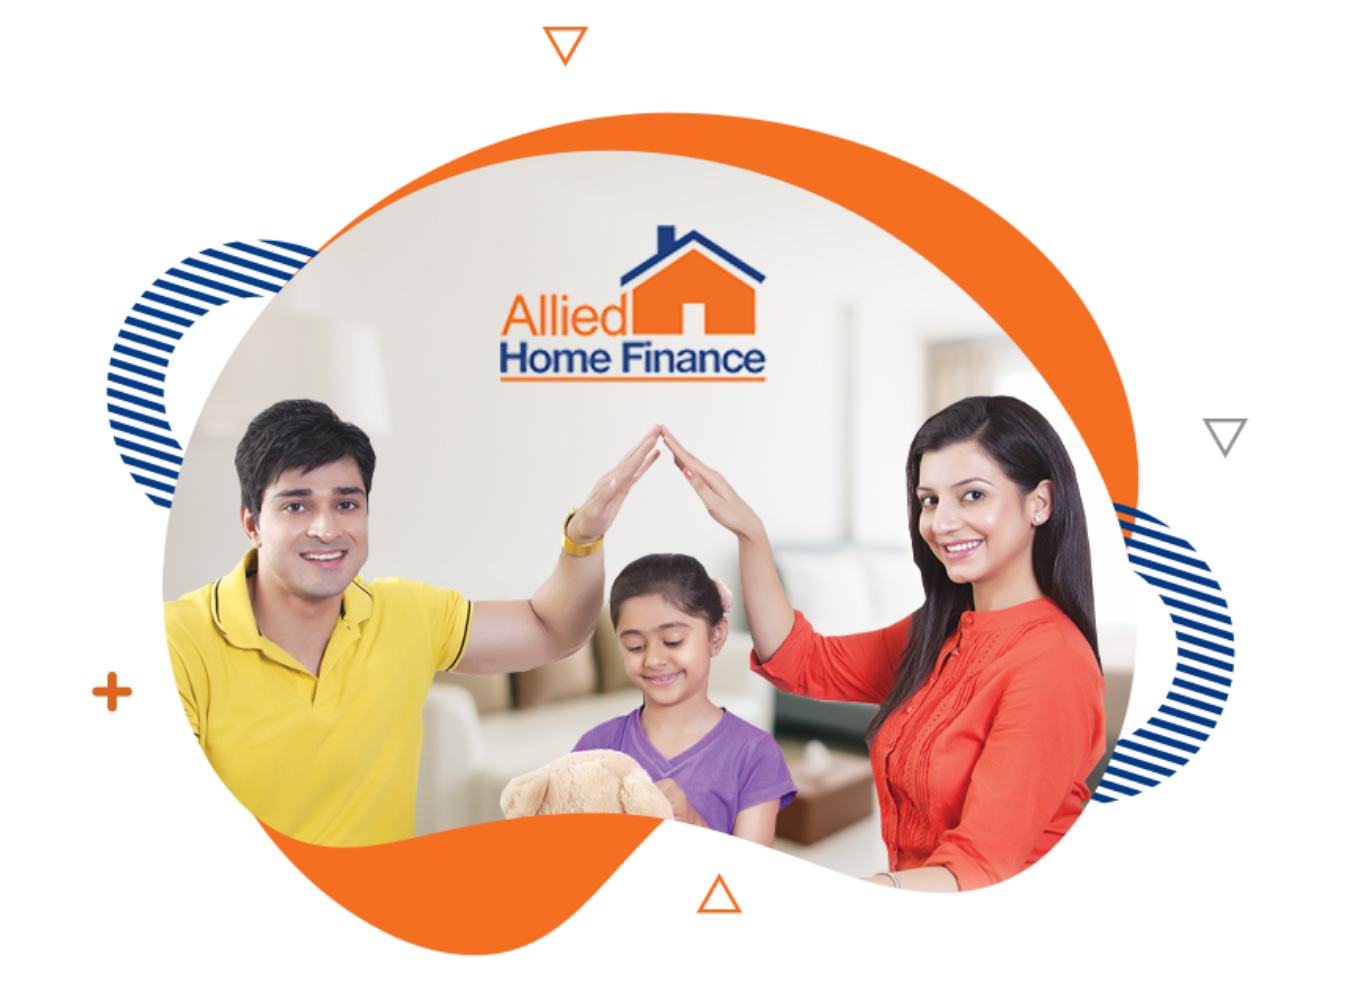 Allied Home Finance